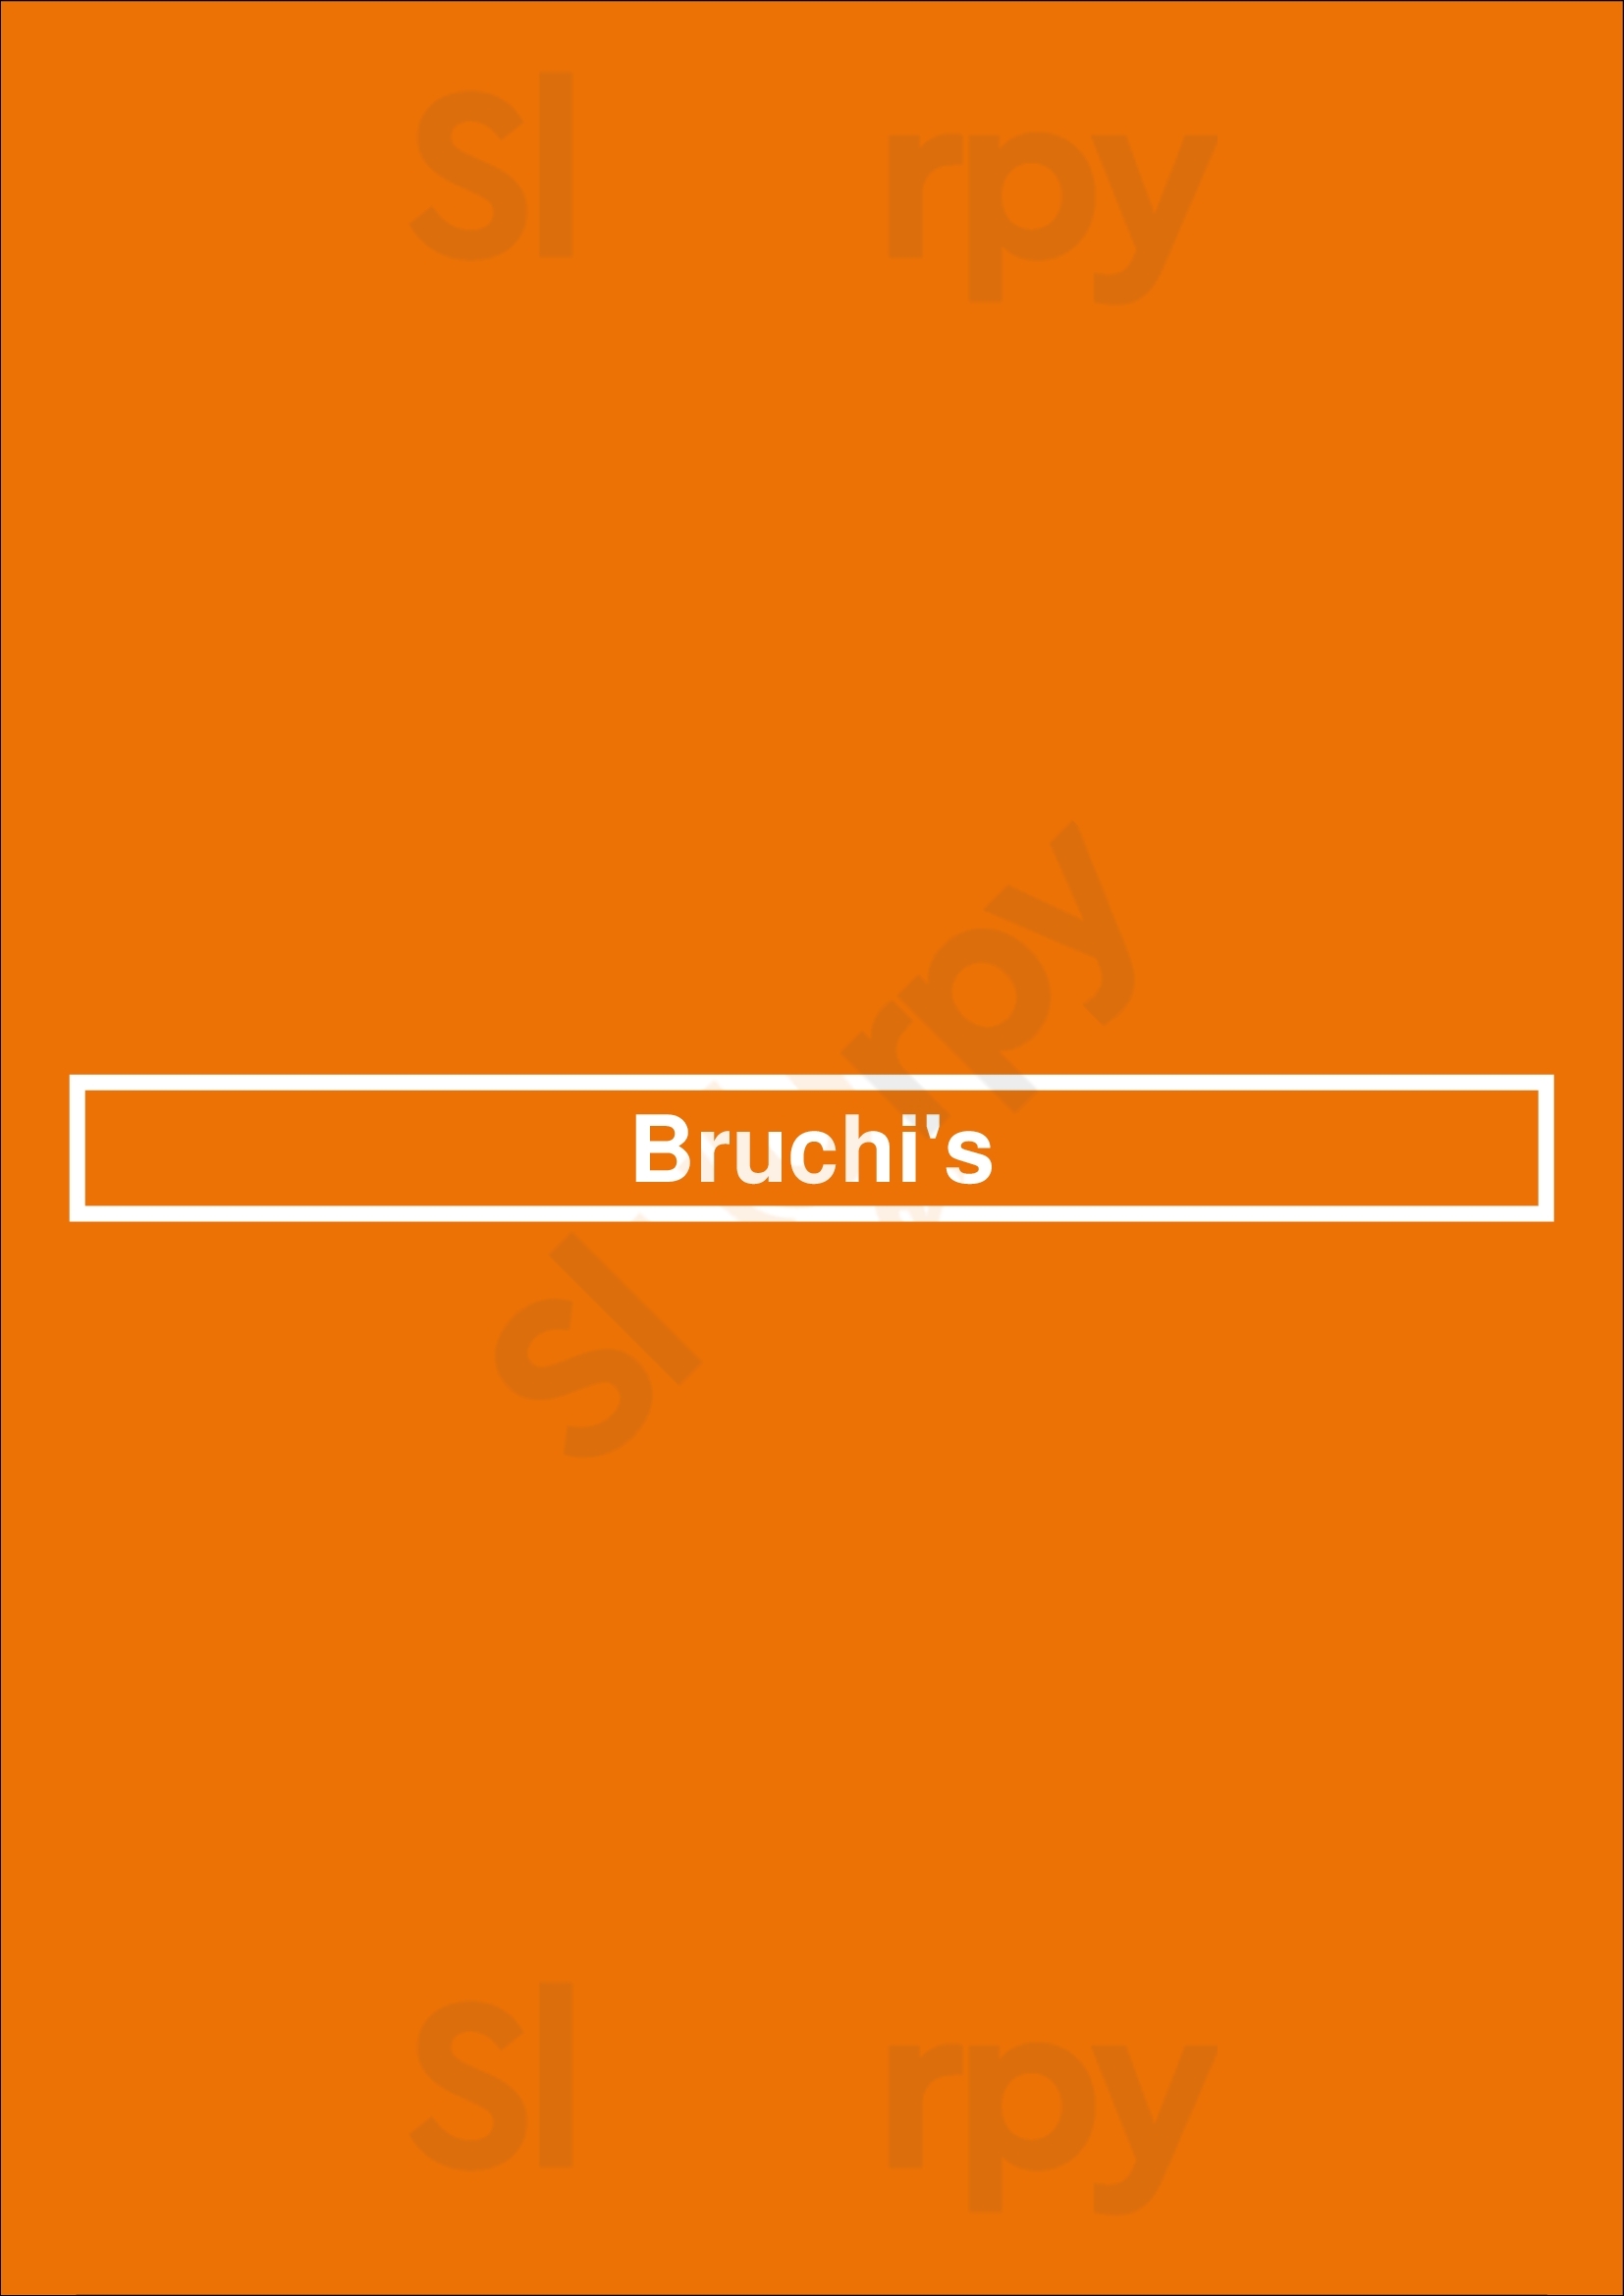 Bruchi's Sacramento Menu - 1